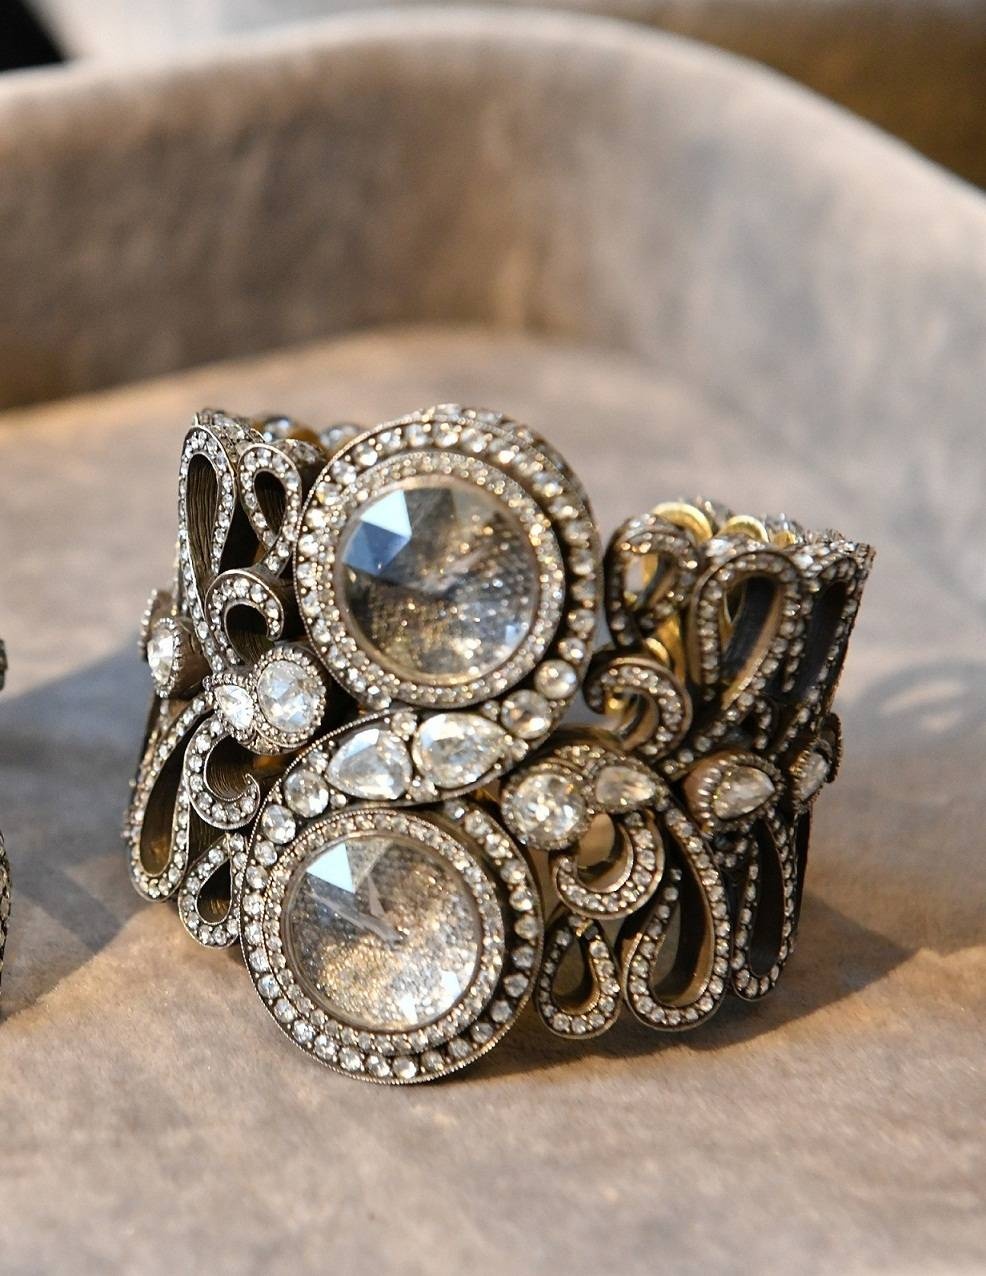 「Infinity」珠寶腕錶以黃金、銀及鑽石打造而成。